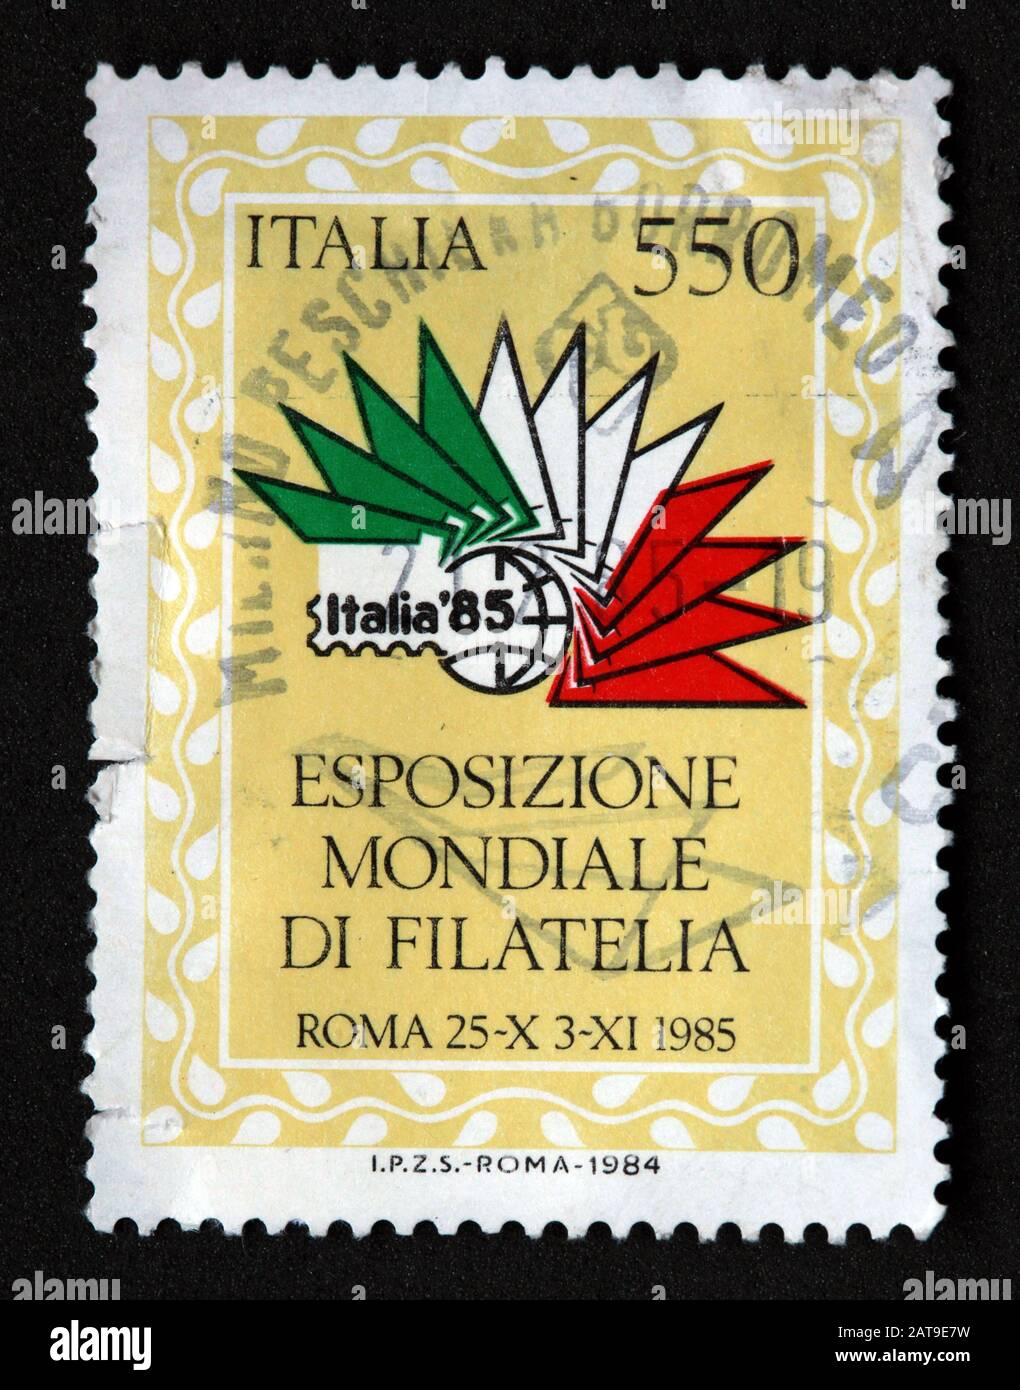 Timbre italien, poste Italia utilisé et franked Stamp, Italia 550lire Italia85 Esposzione mondiale di Filatelia - Roma 25-X 3-XI, 1985 Banque D'Images